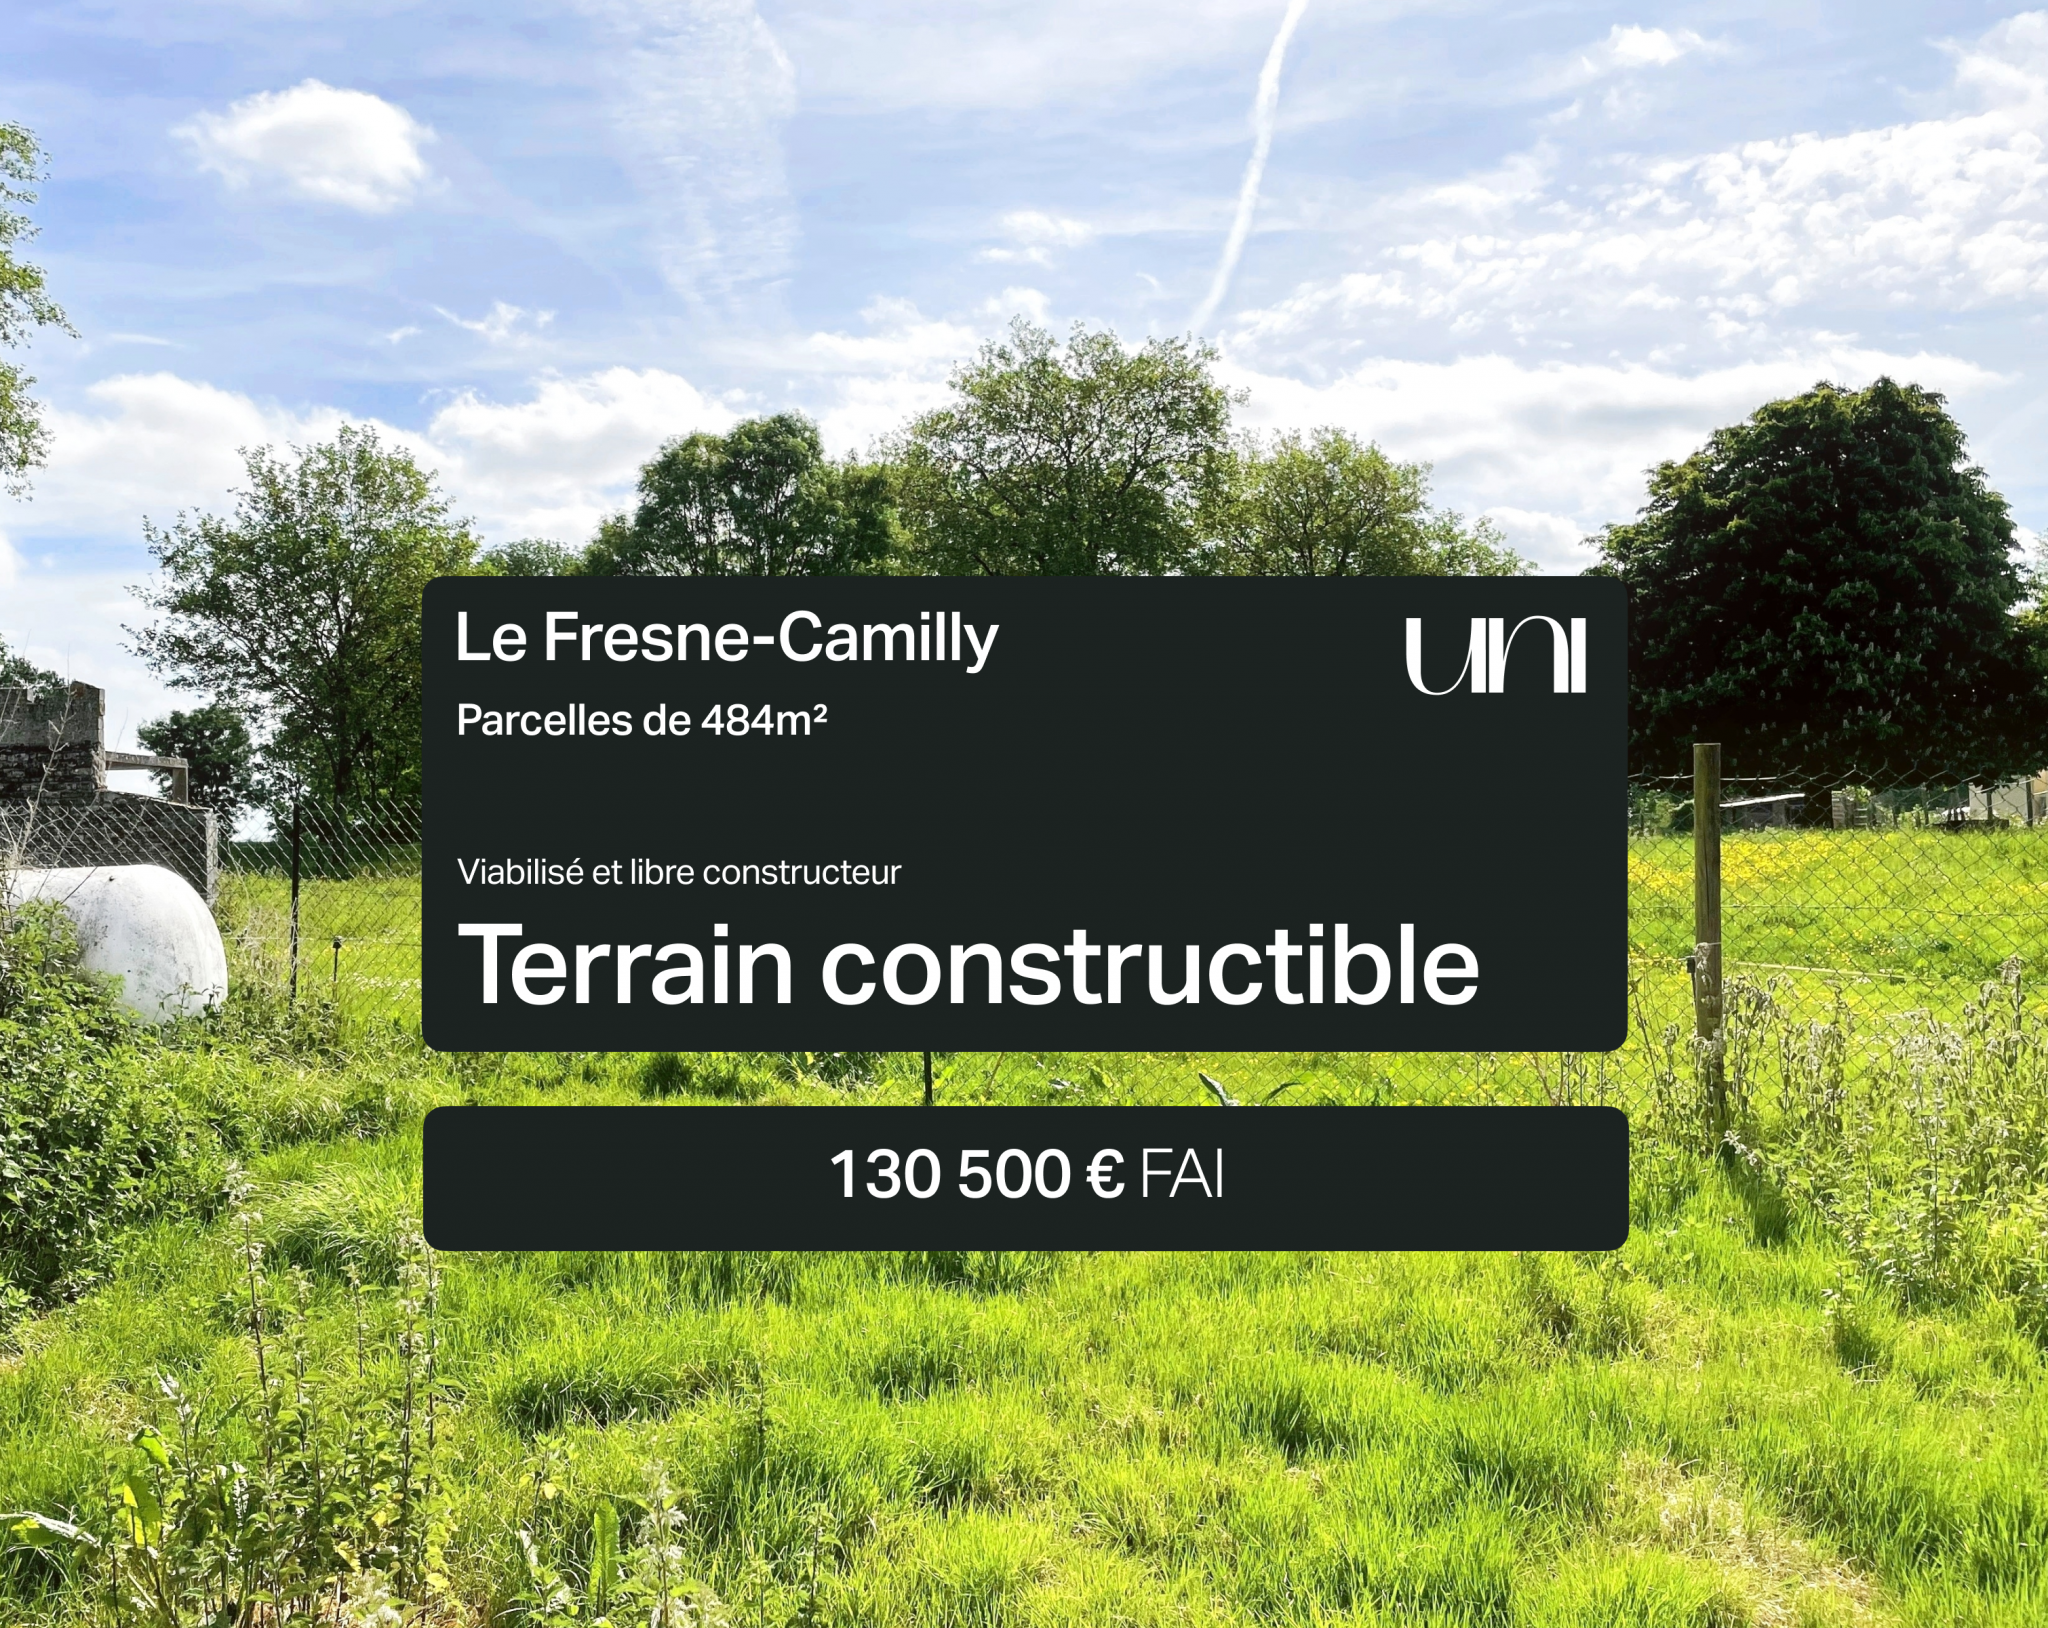 Terrain constructible au Fresne-Camilly !